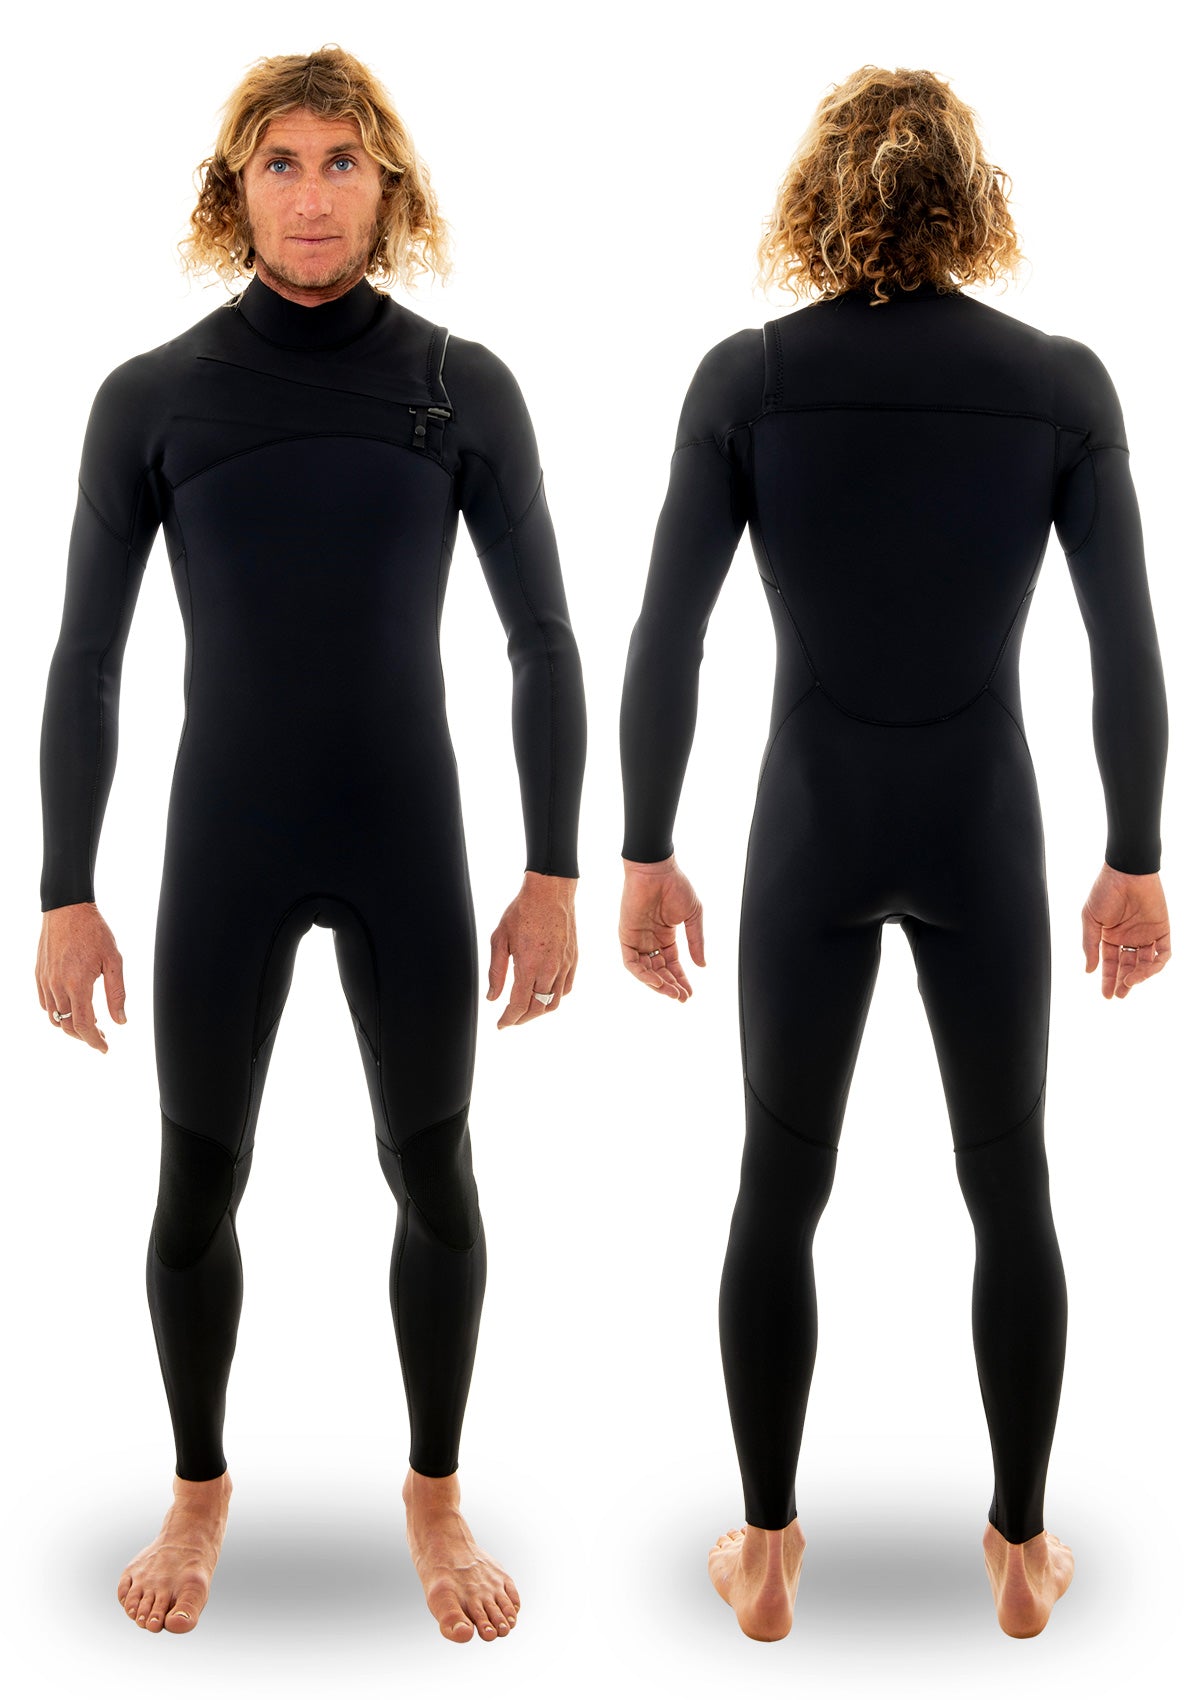 needessentials 3/2 thermal chest zip wetsuit surfing wetsuit winter black non branded 